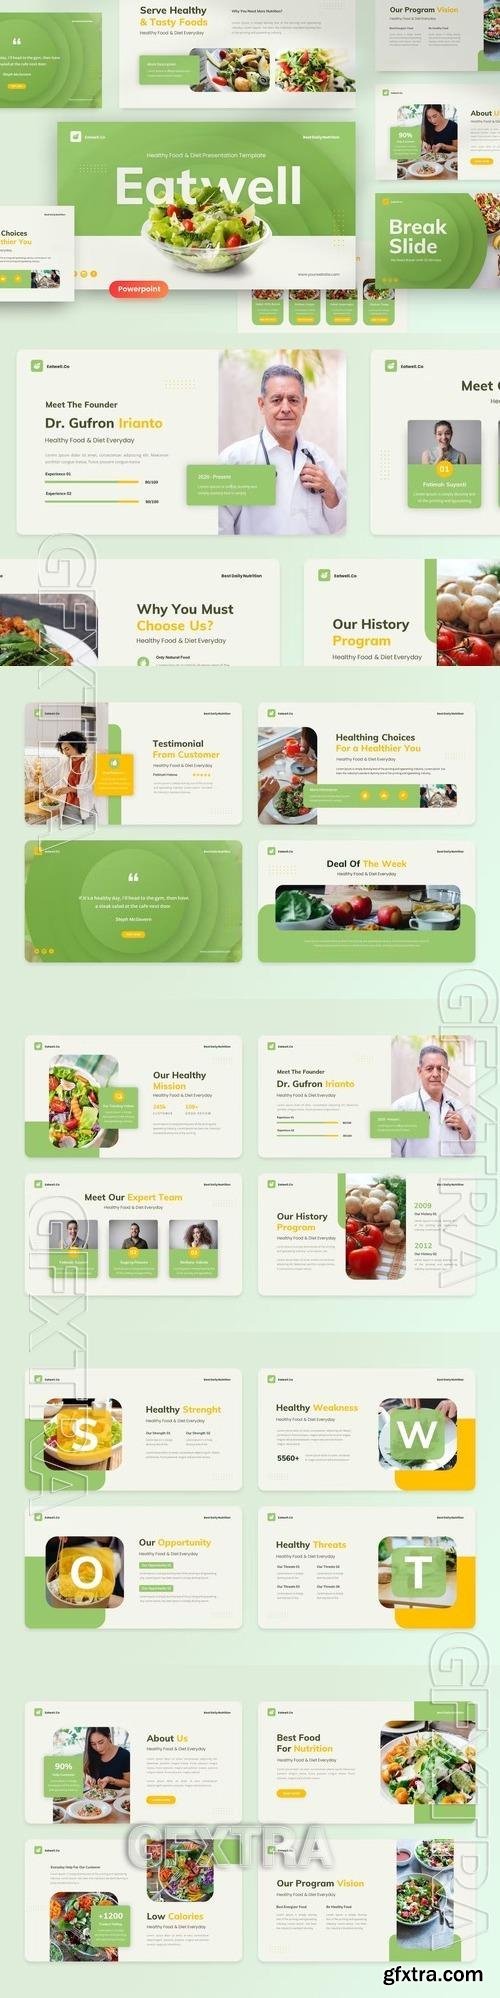 Eatwell - Healthy Food & Diet Powerpoint, Keynote and Google Slides Template